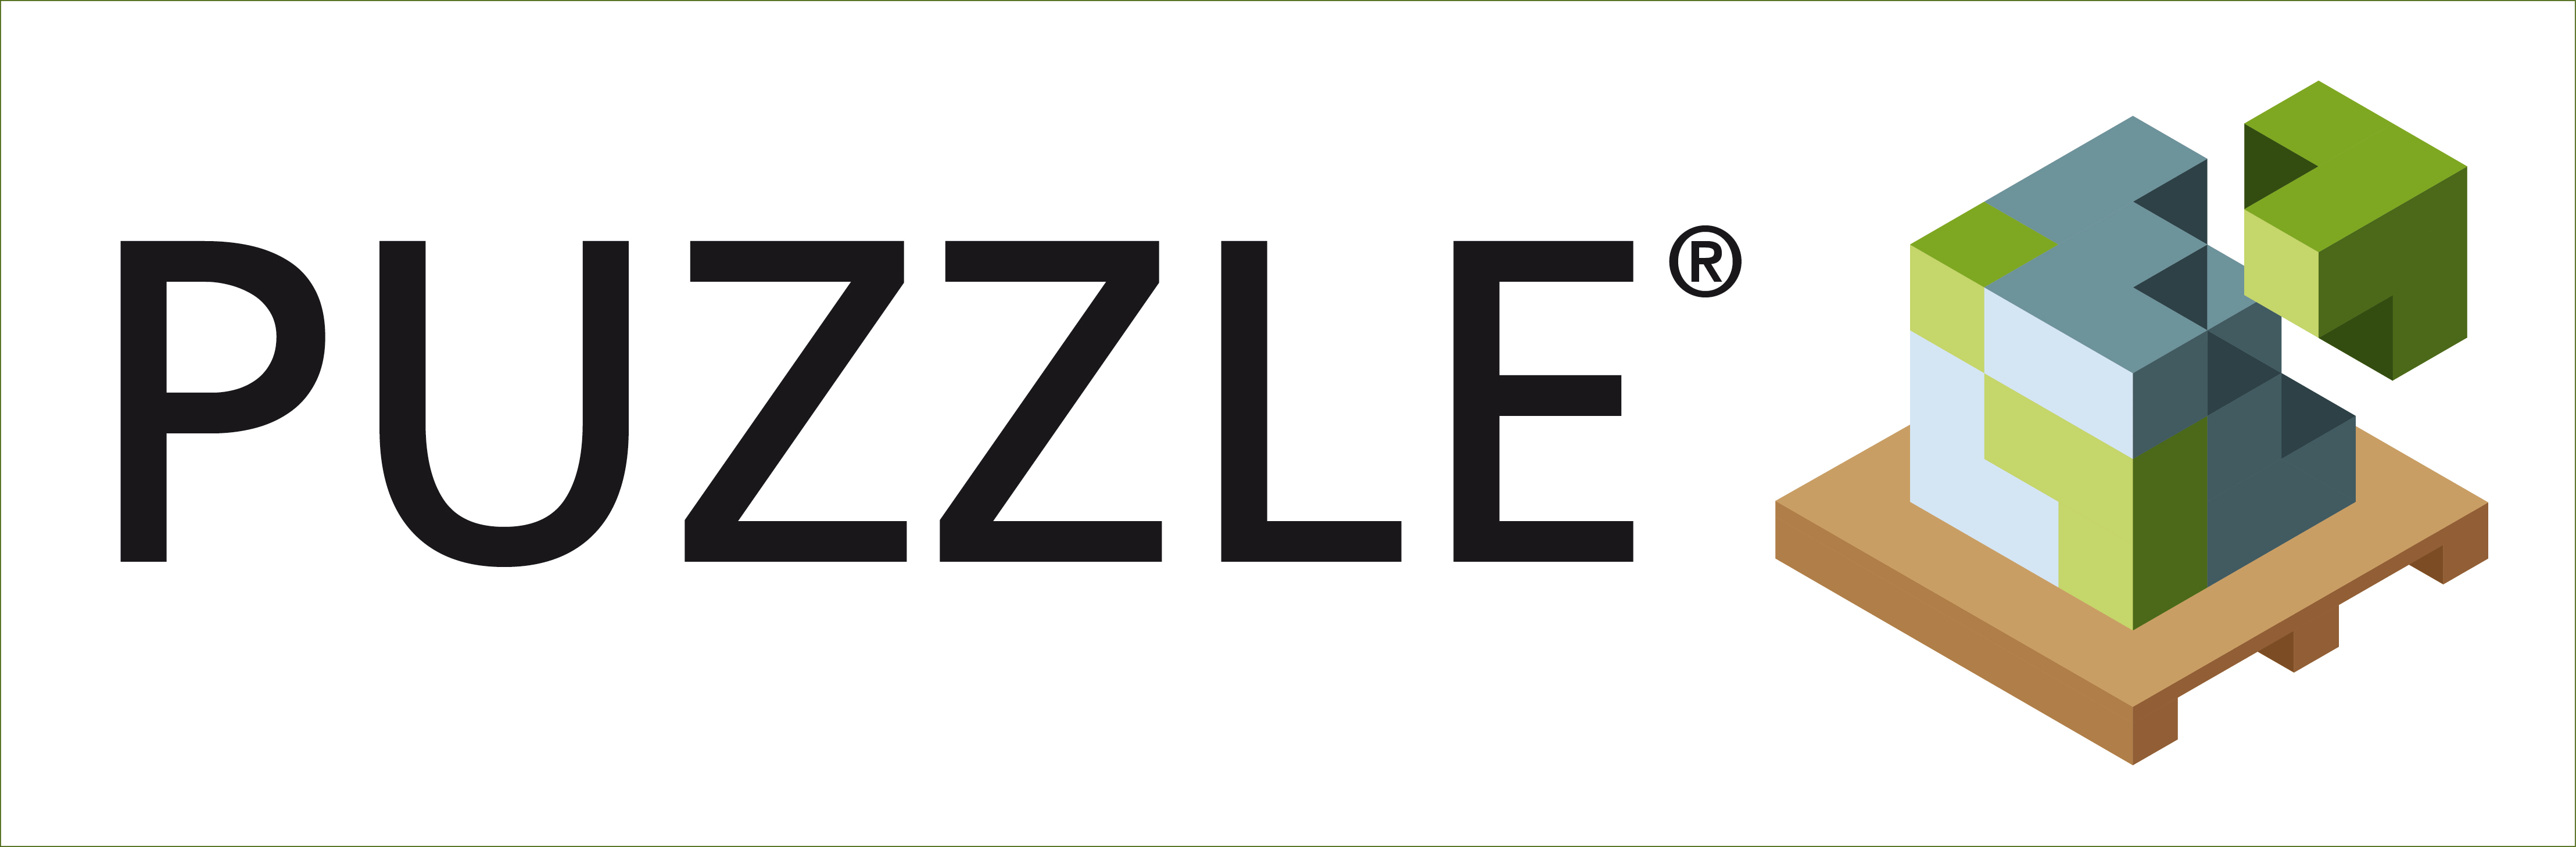 PUZZLE - API Logo